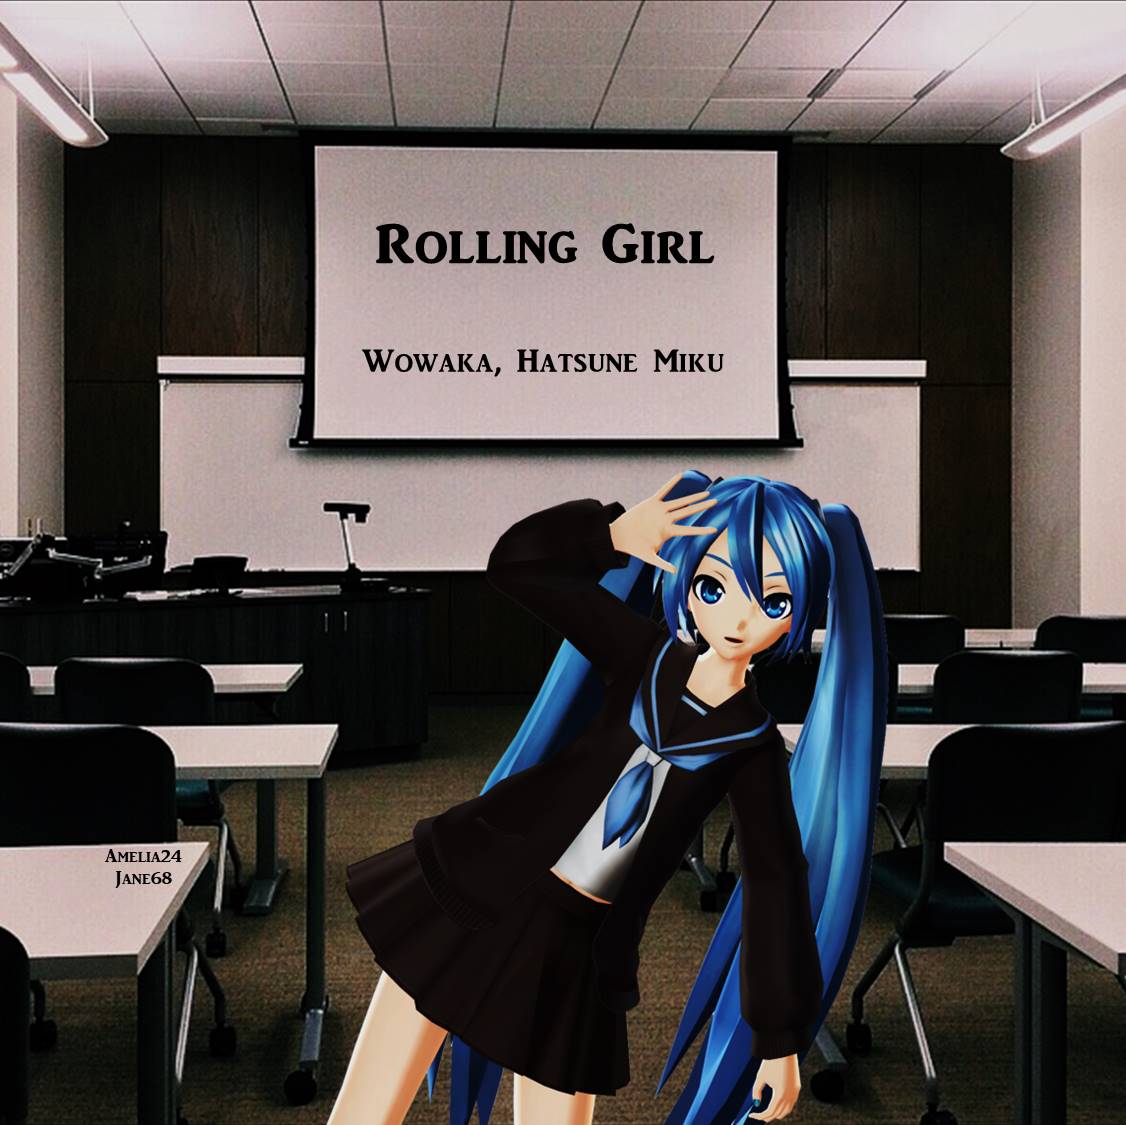  Rolling Girl سے طرف کی Wowaka, Hatsune Miku